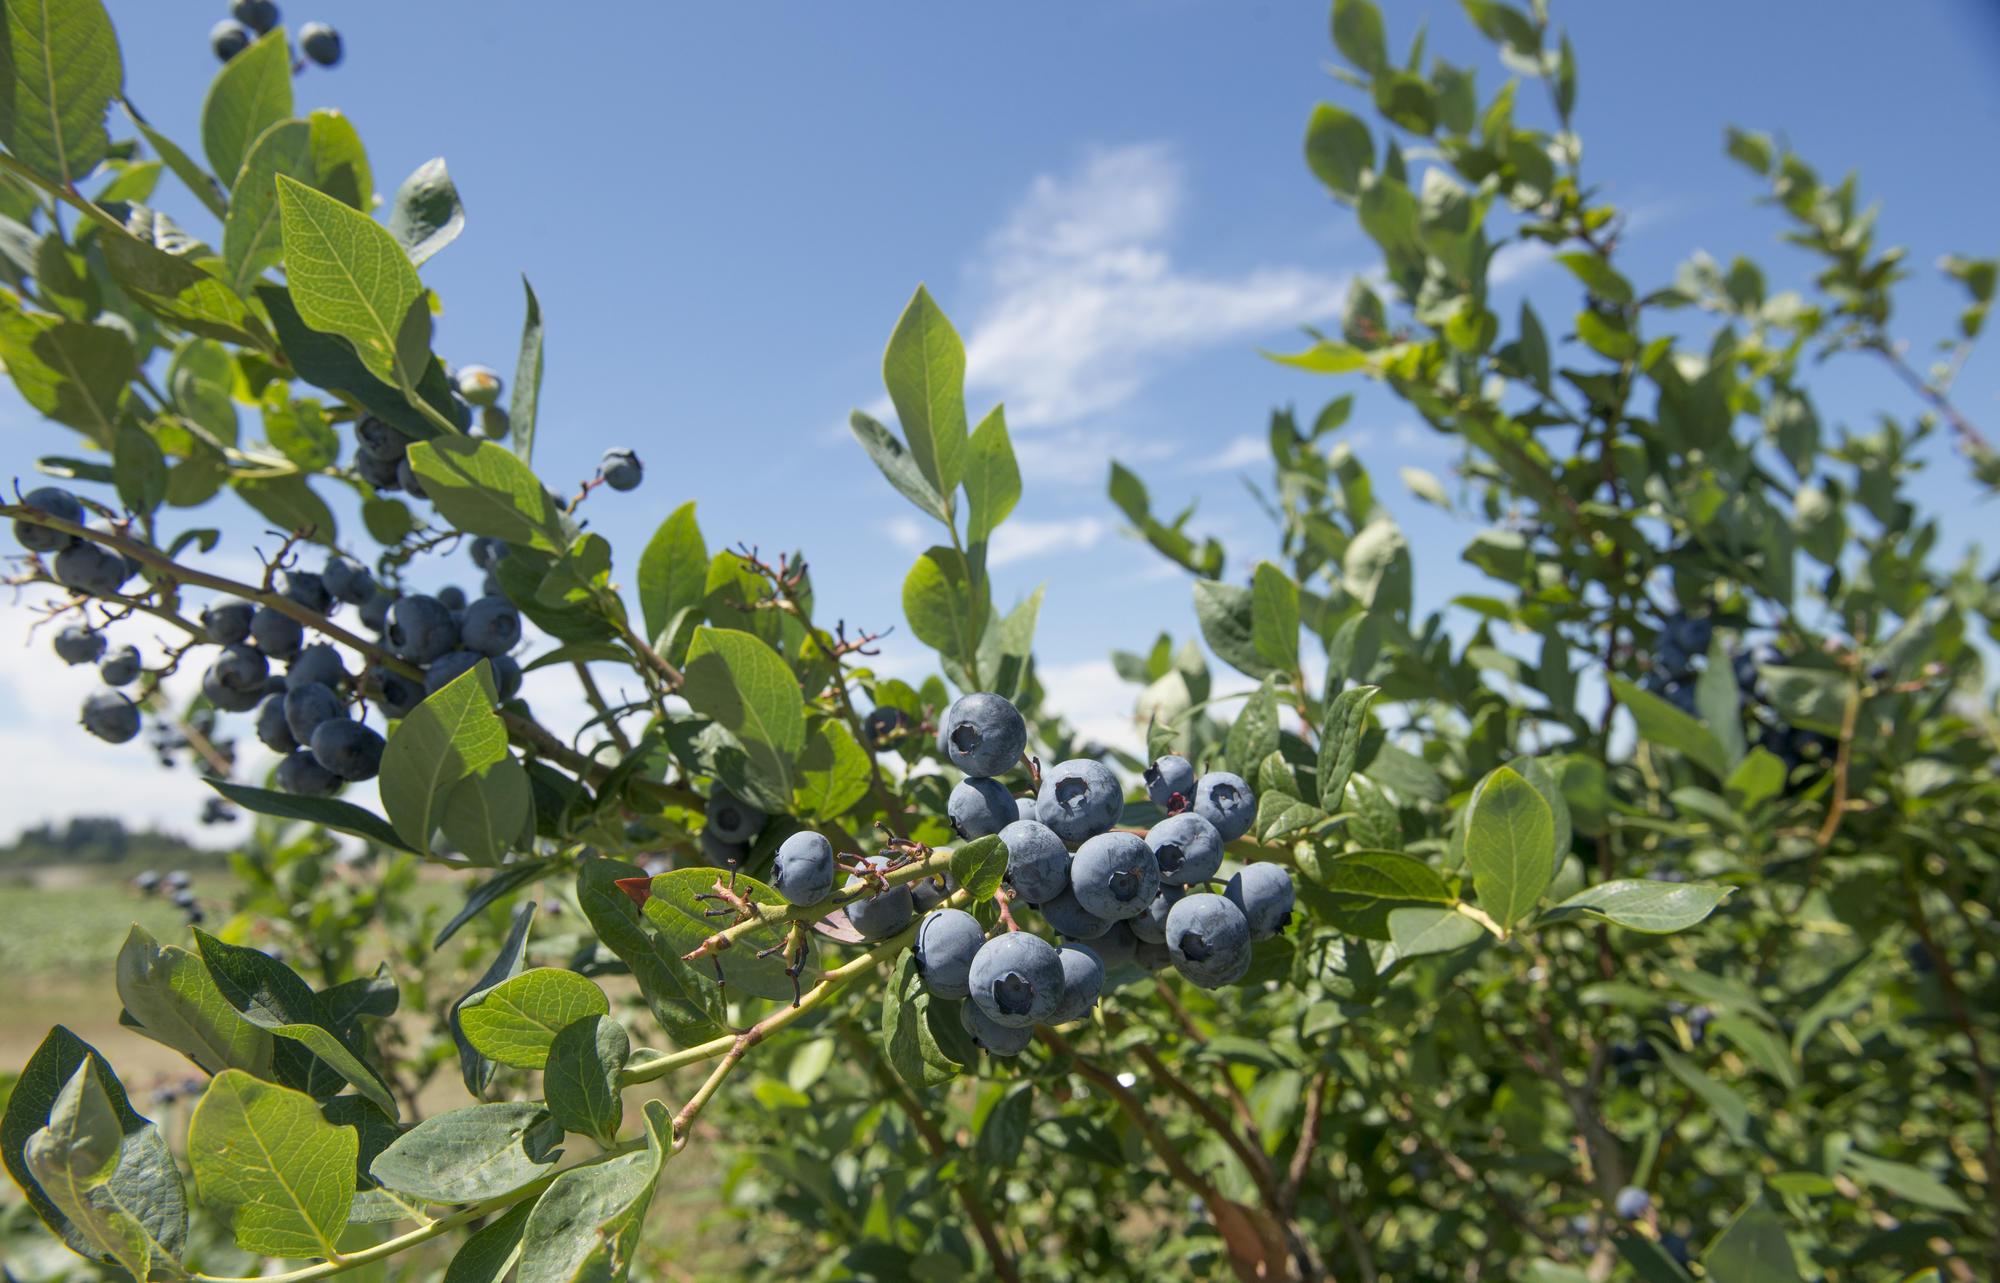 blueberries ripening on a bush